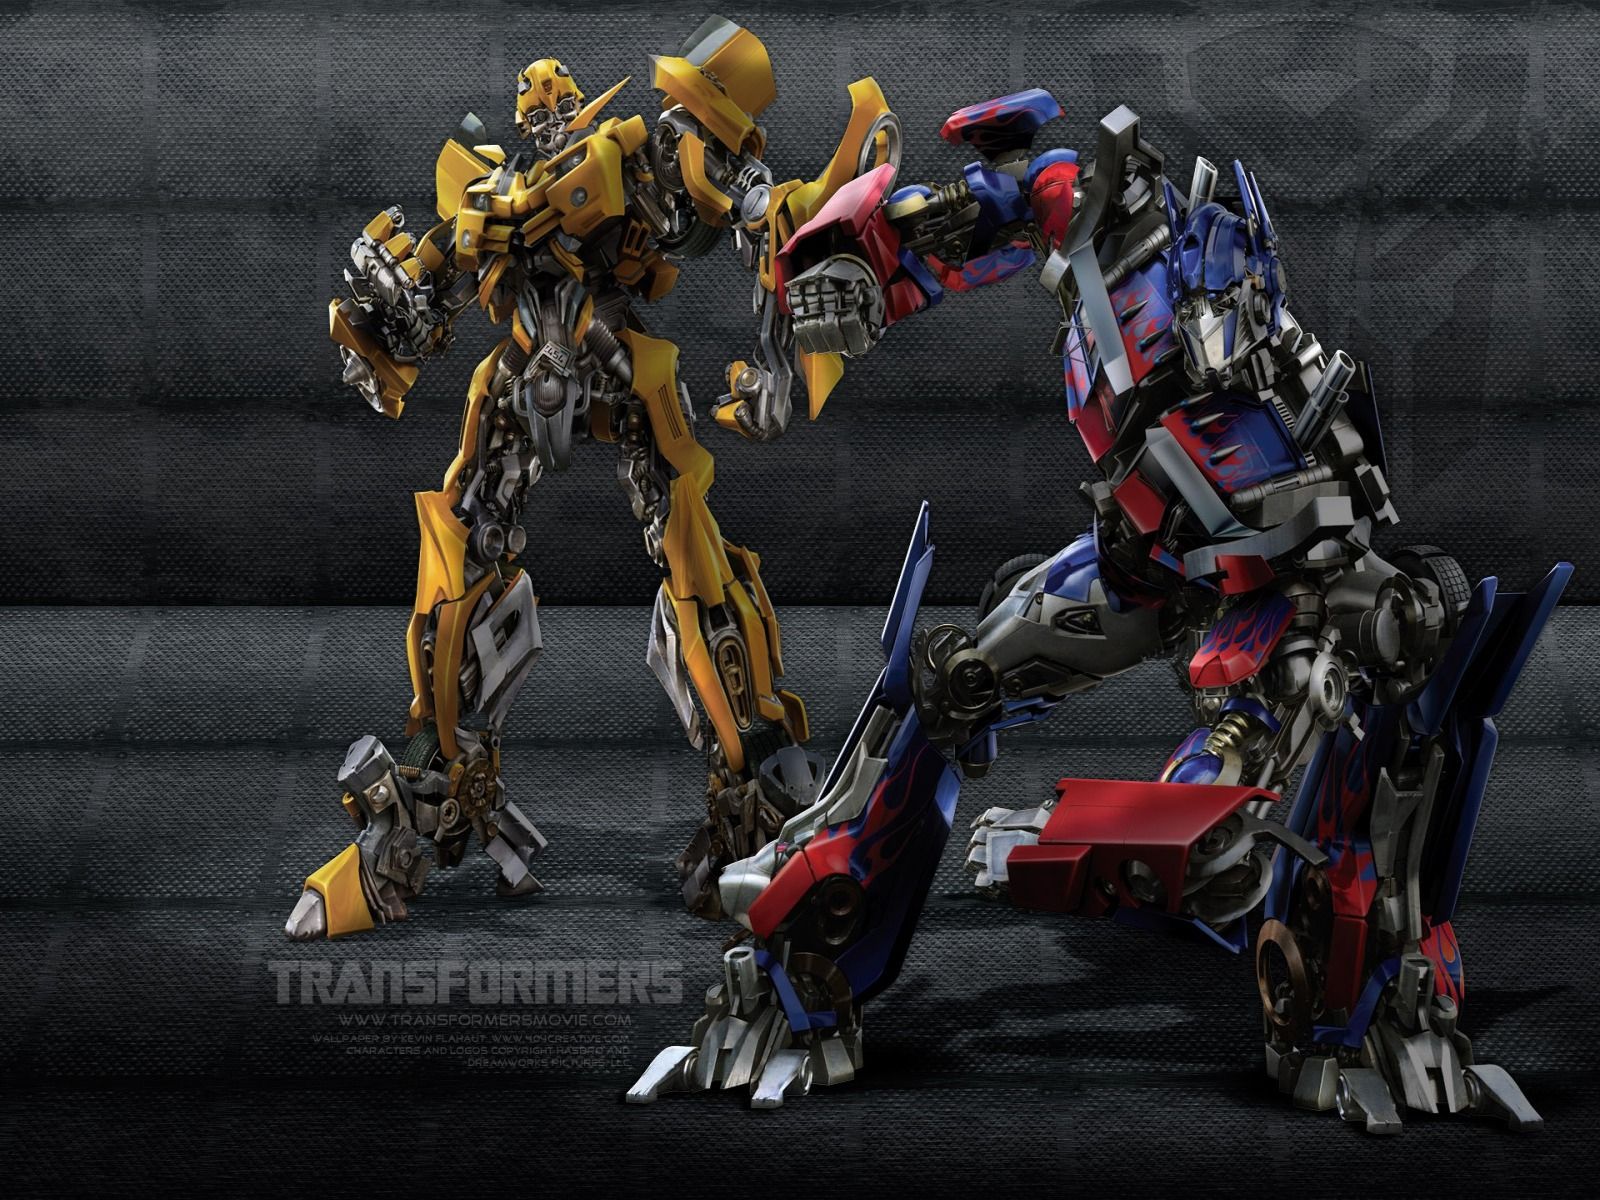 Bumblebee Optimus Wallpaper Transformers Movies Wallpaper in jpg format for free download